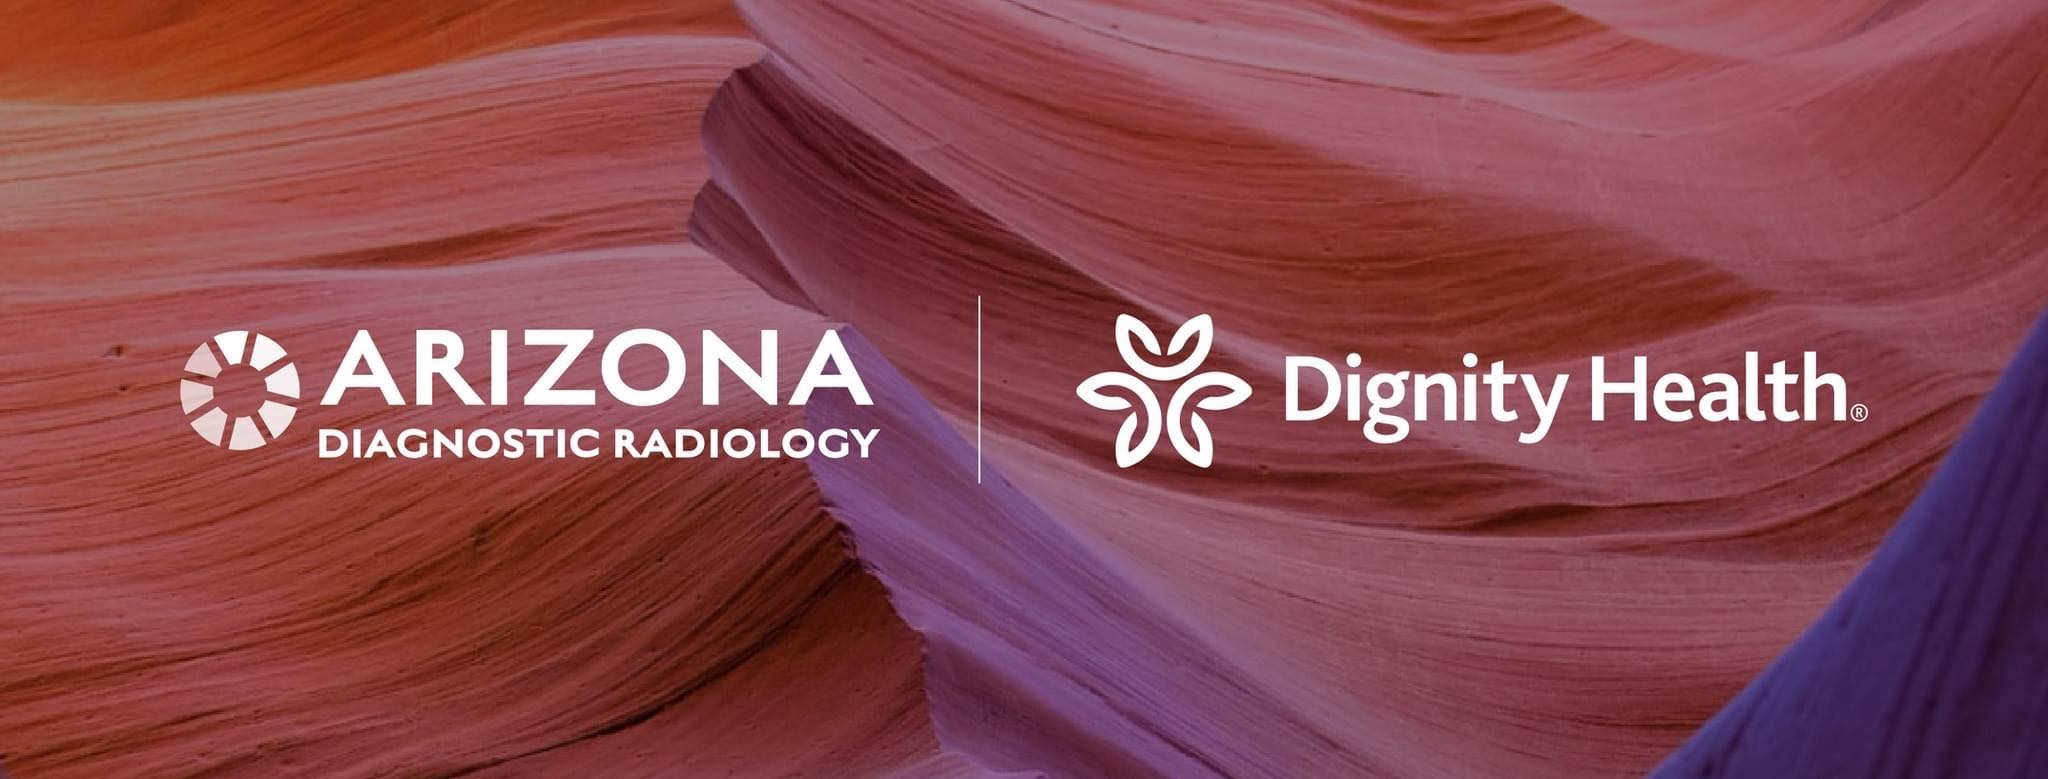 Arizona Diagnostic Radiology Linkedin